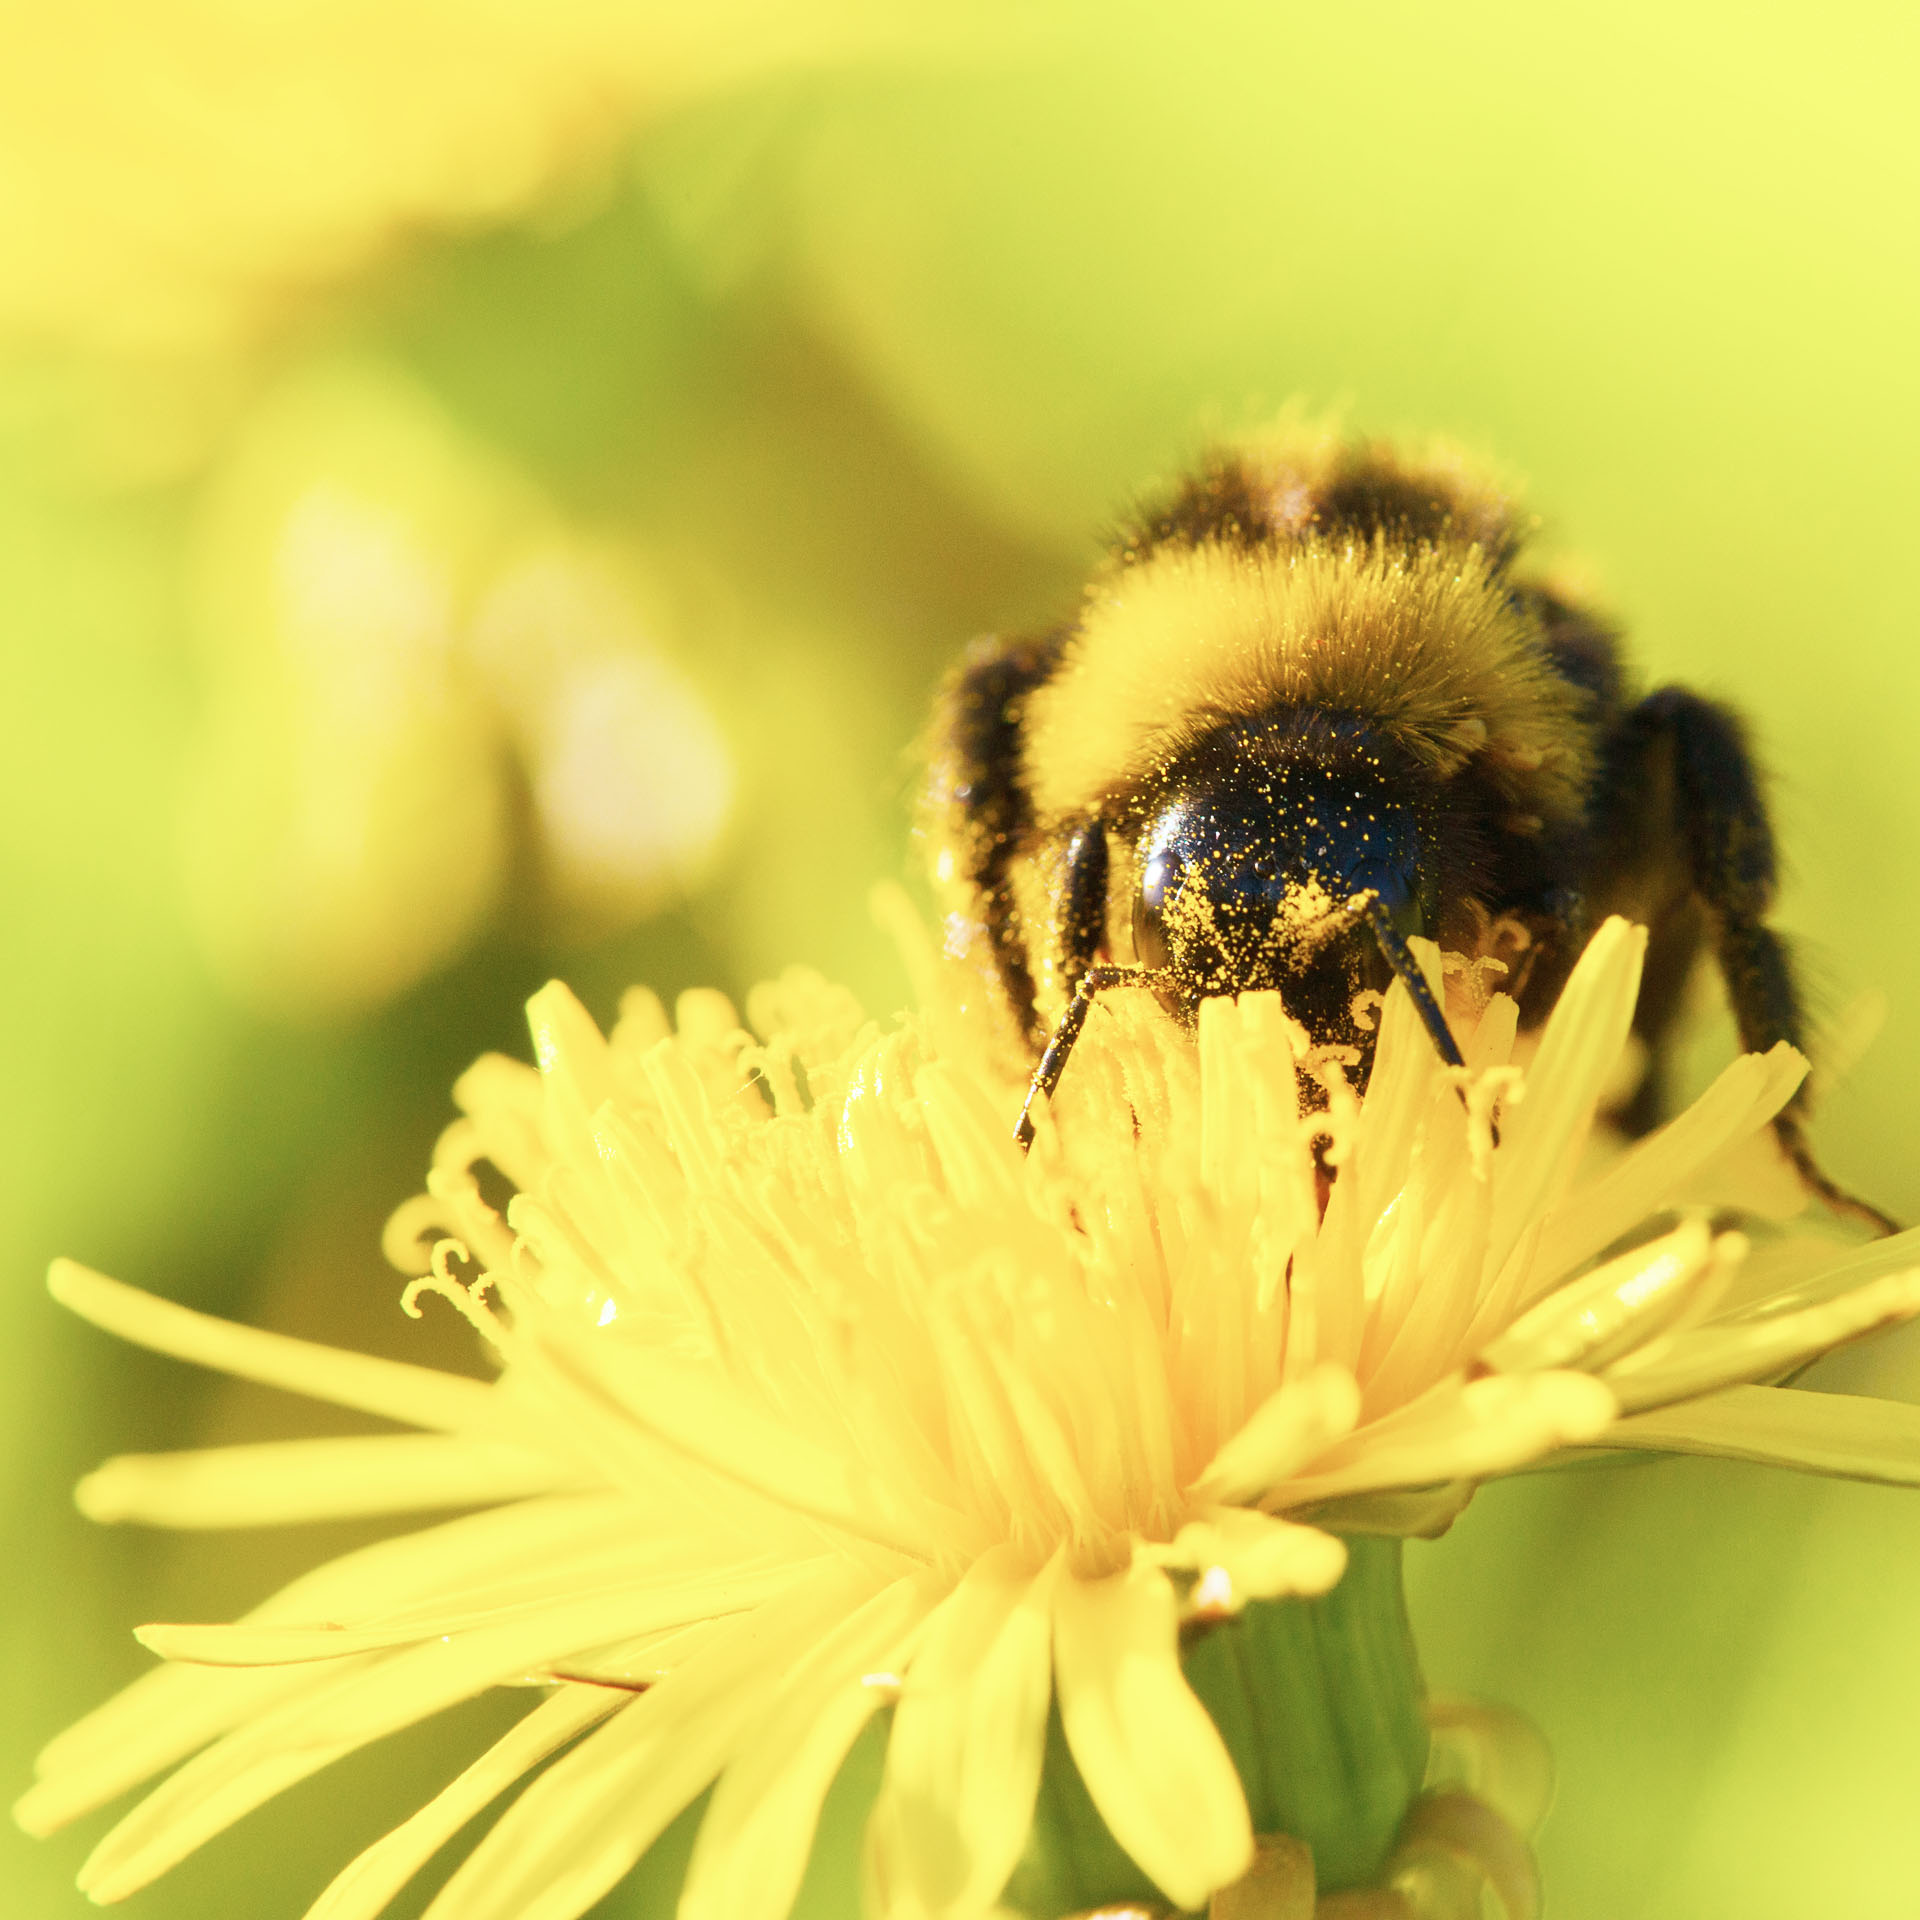 Bumblebee on Dandelion Flower